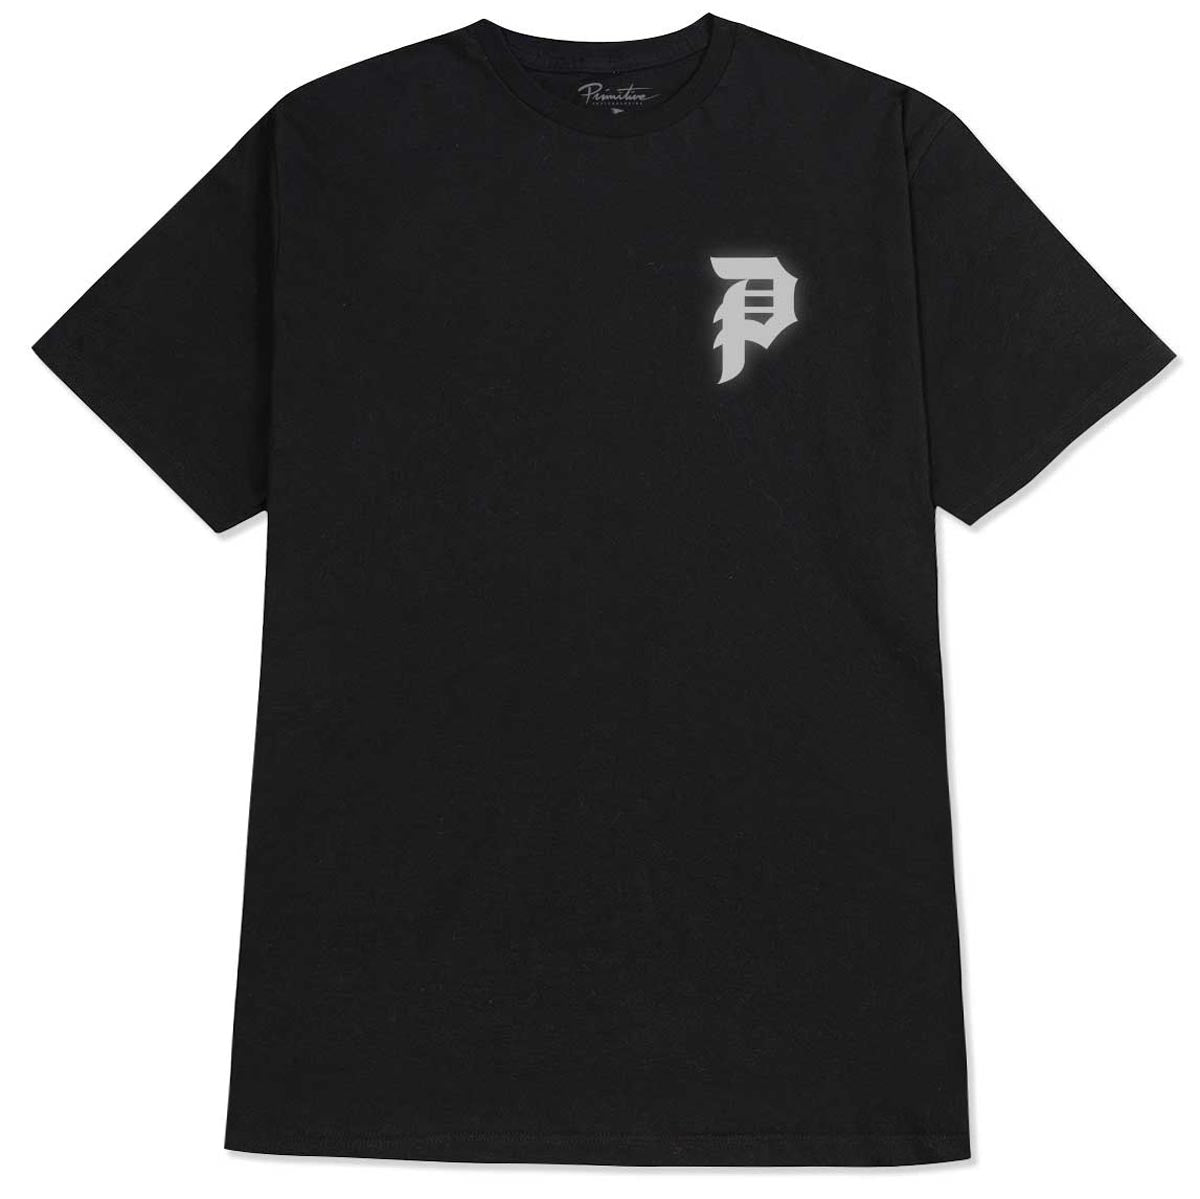 Primitive Warnings T-Shirt - Black image 2